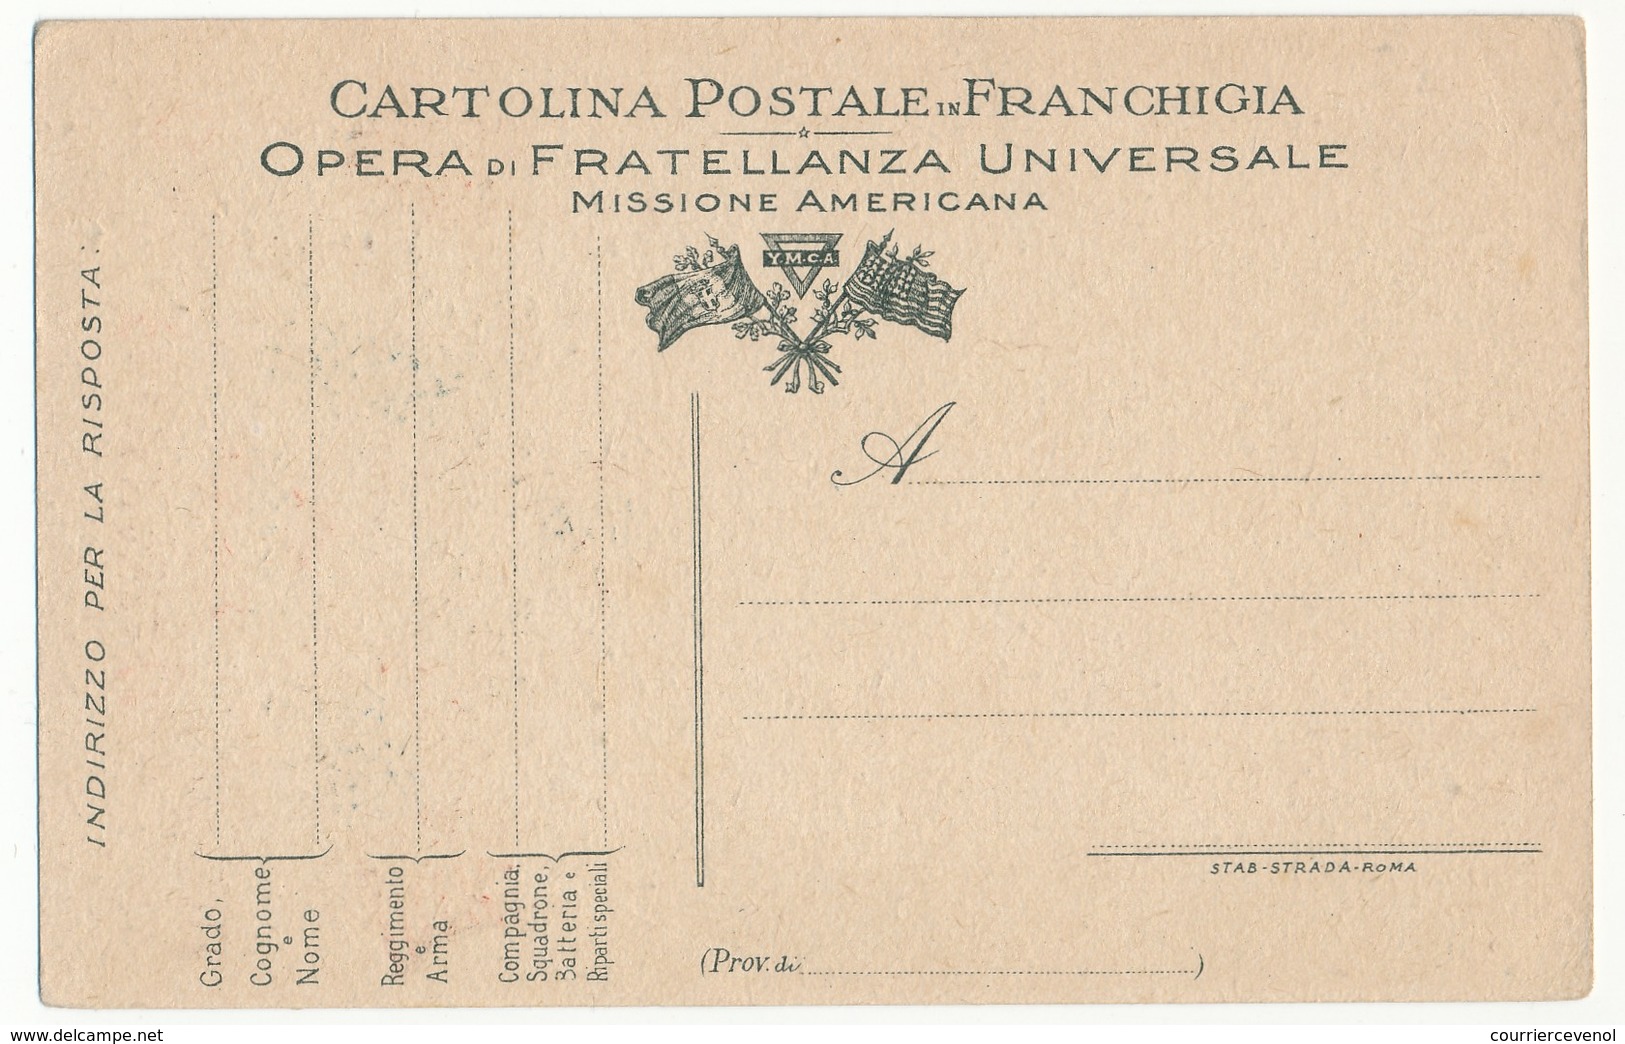 Carte Postale De Franchise Militaire - YMCA - Missione Americana - Military Mail (PM)